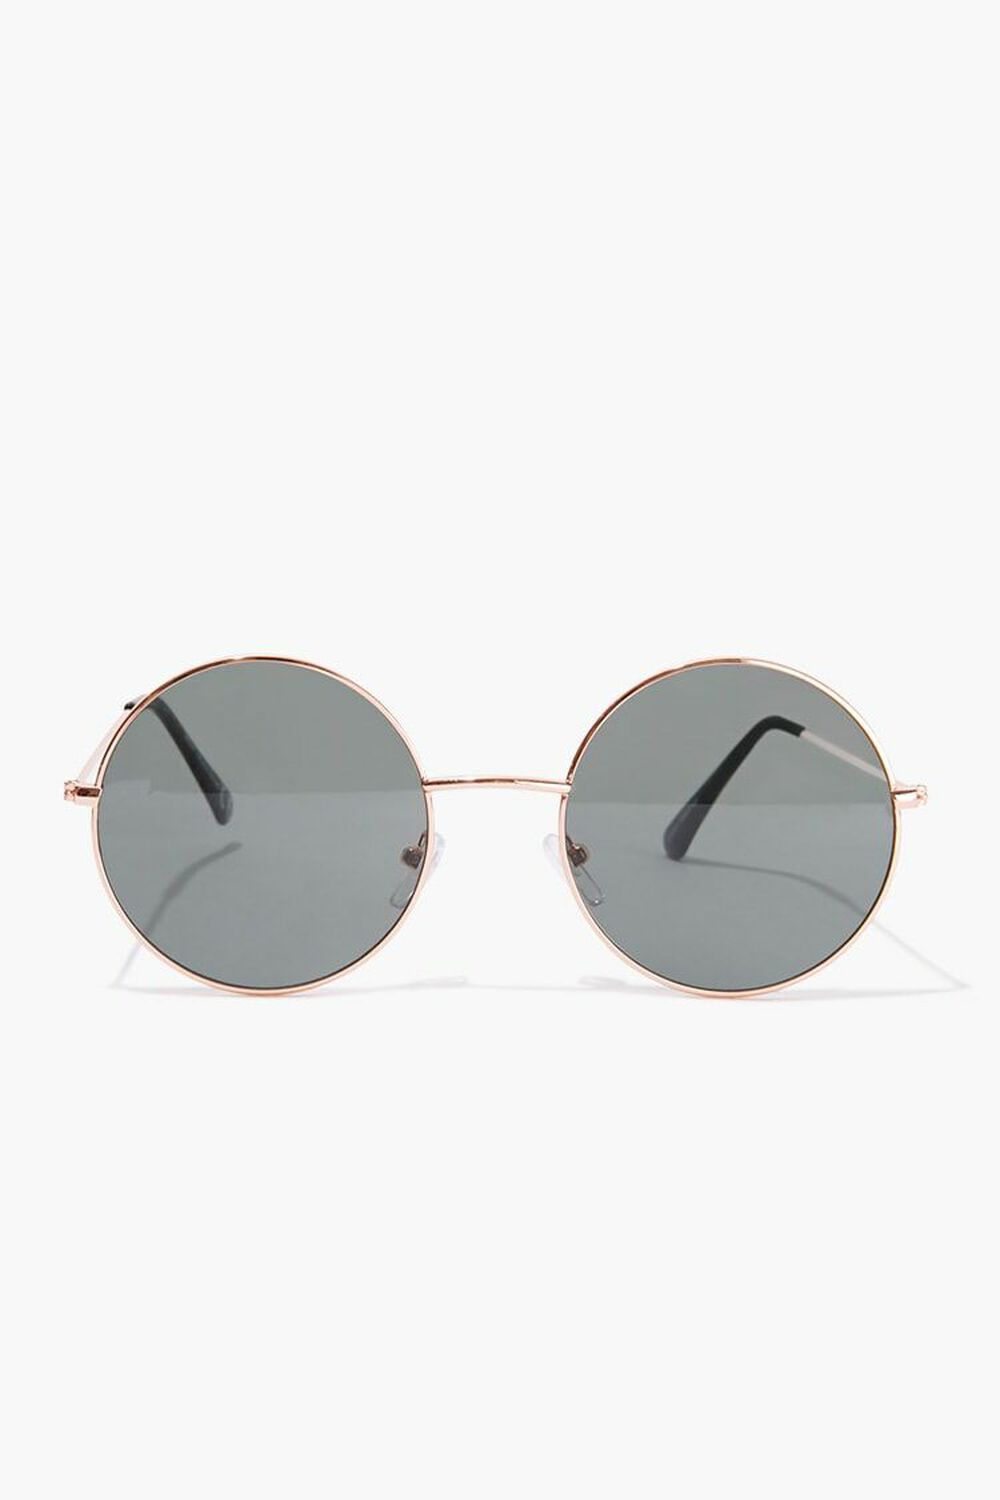 ROSE GOLD/OLIVE Round Frame Sunglasses, image 1